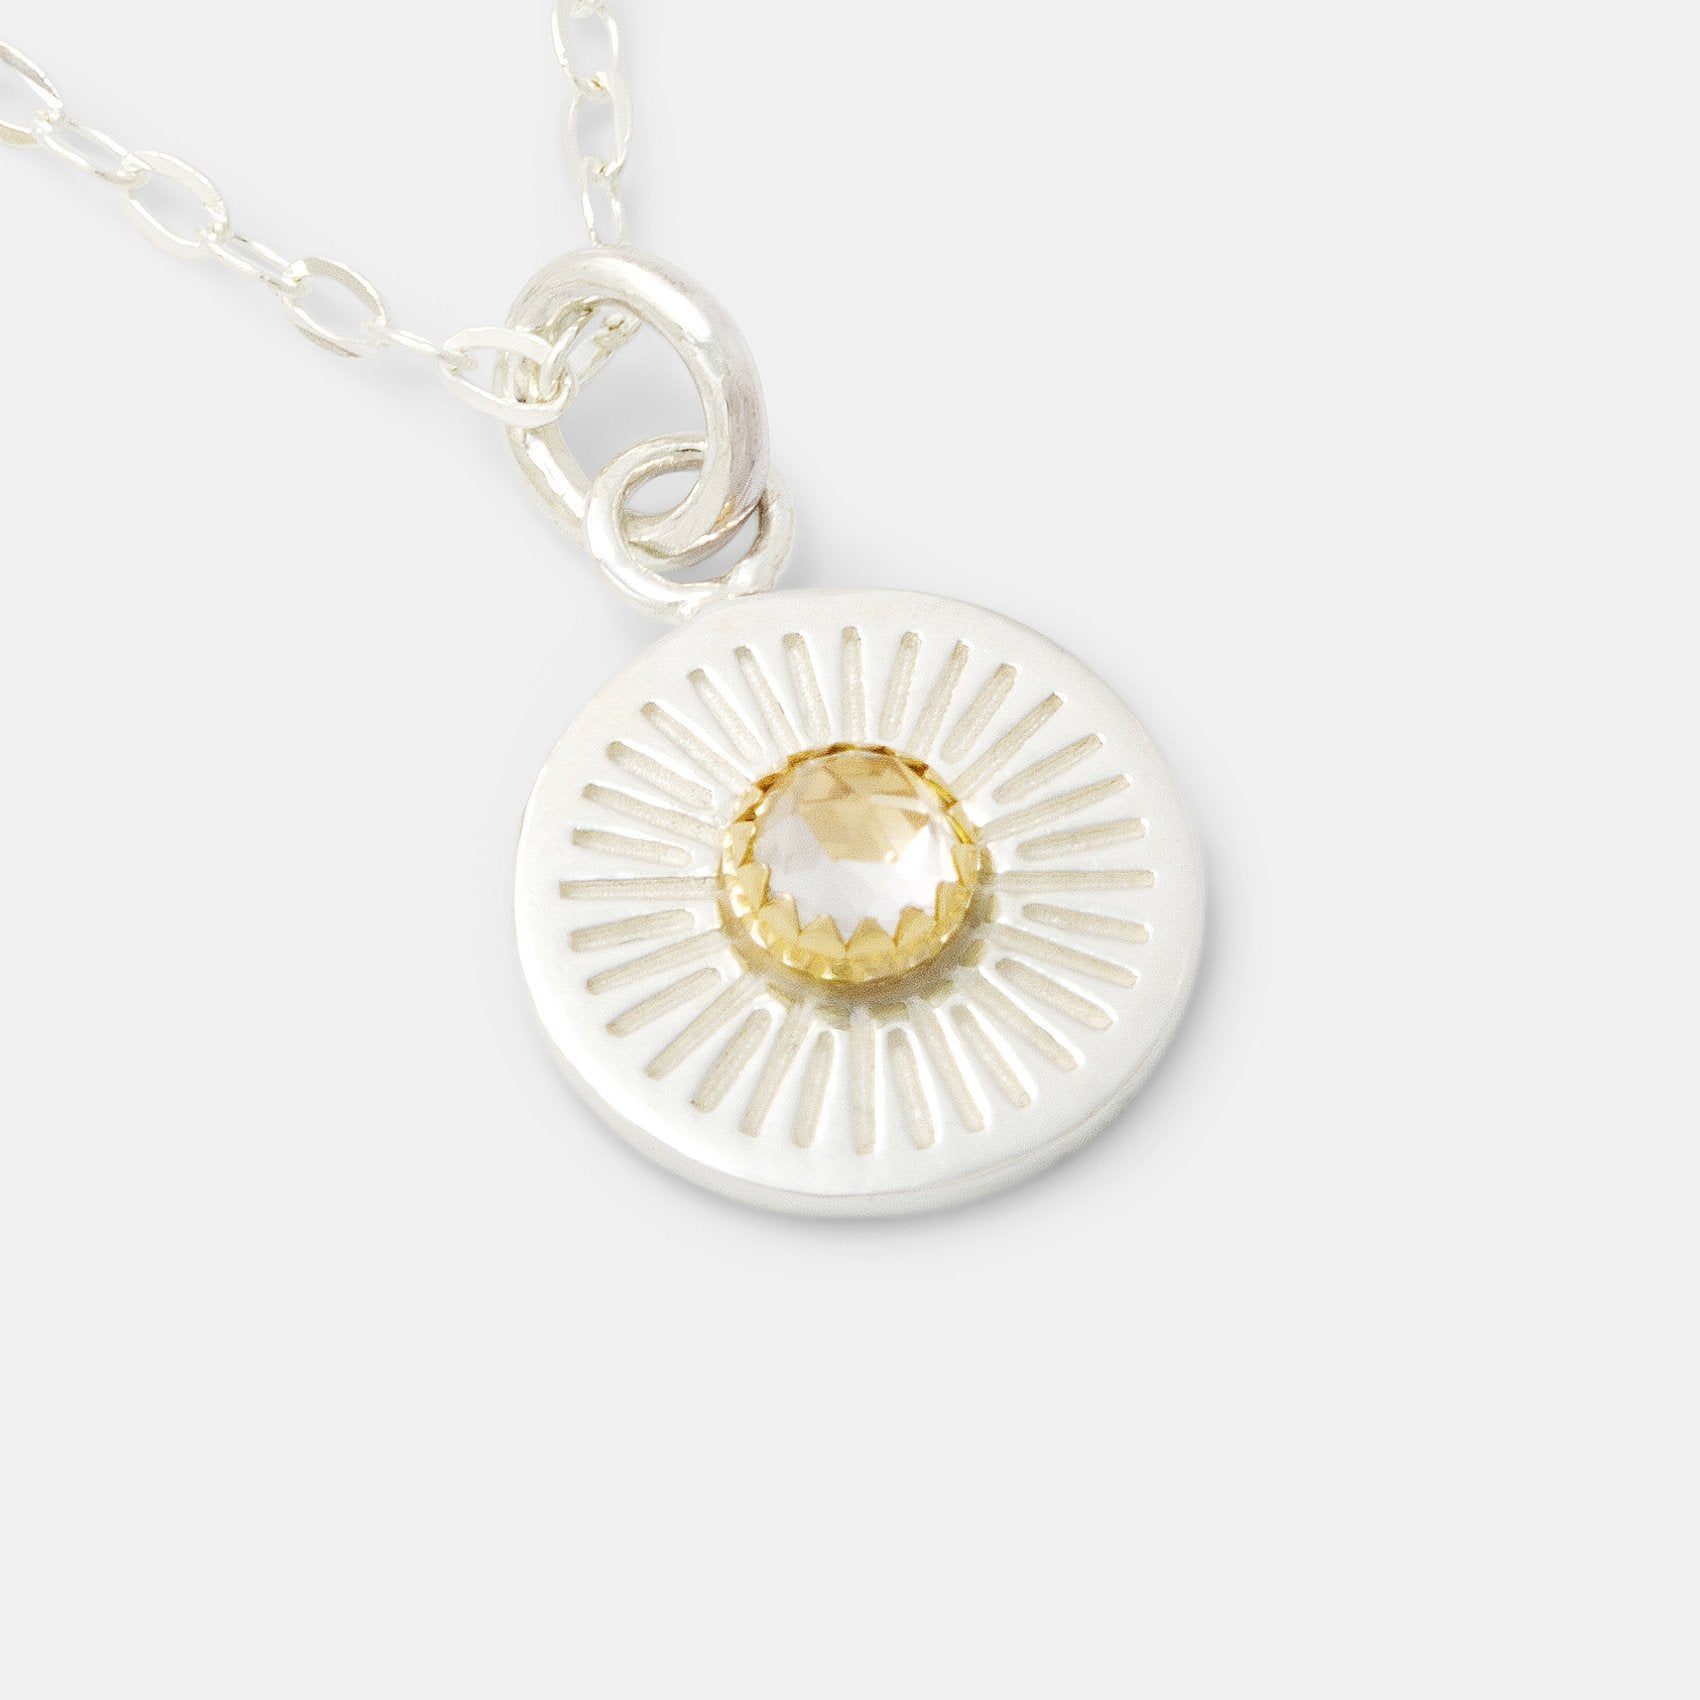 Birthstone pendant: white topaz - Simone Walsh Jewellery Australia